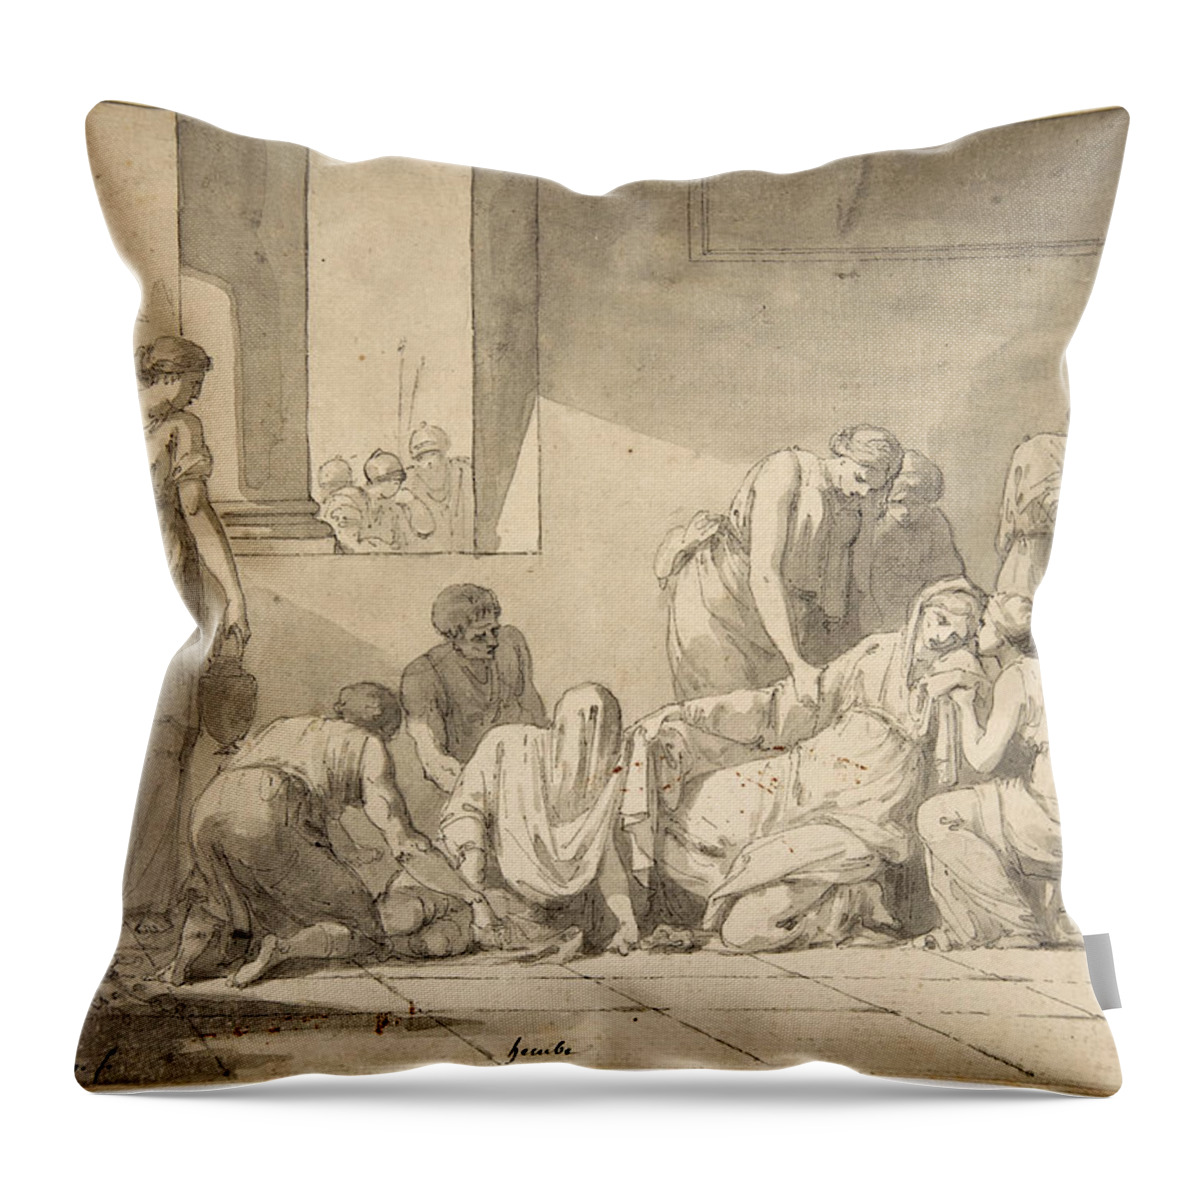 Jean-francois-pierre Peyron Throw Pillow featuring the drawing Despair of Hecuba by Jean-Francois-Pierre Peyron